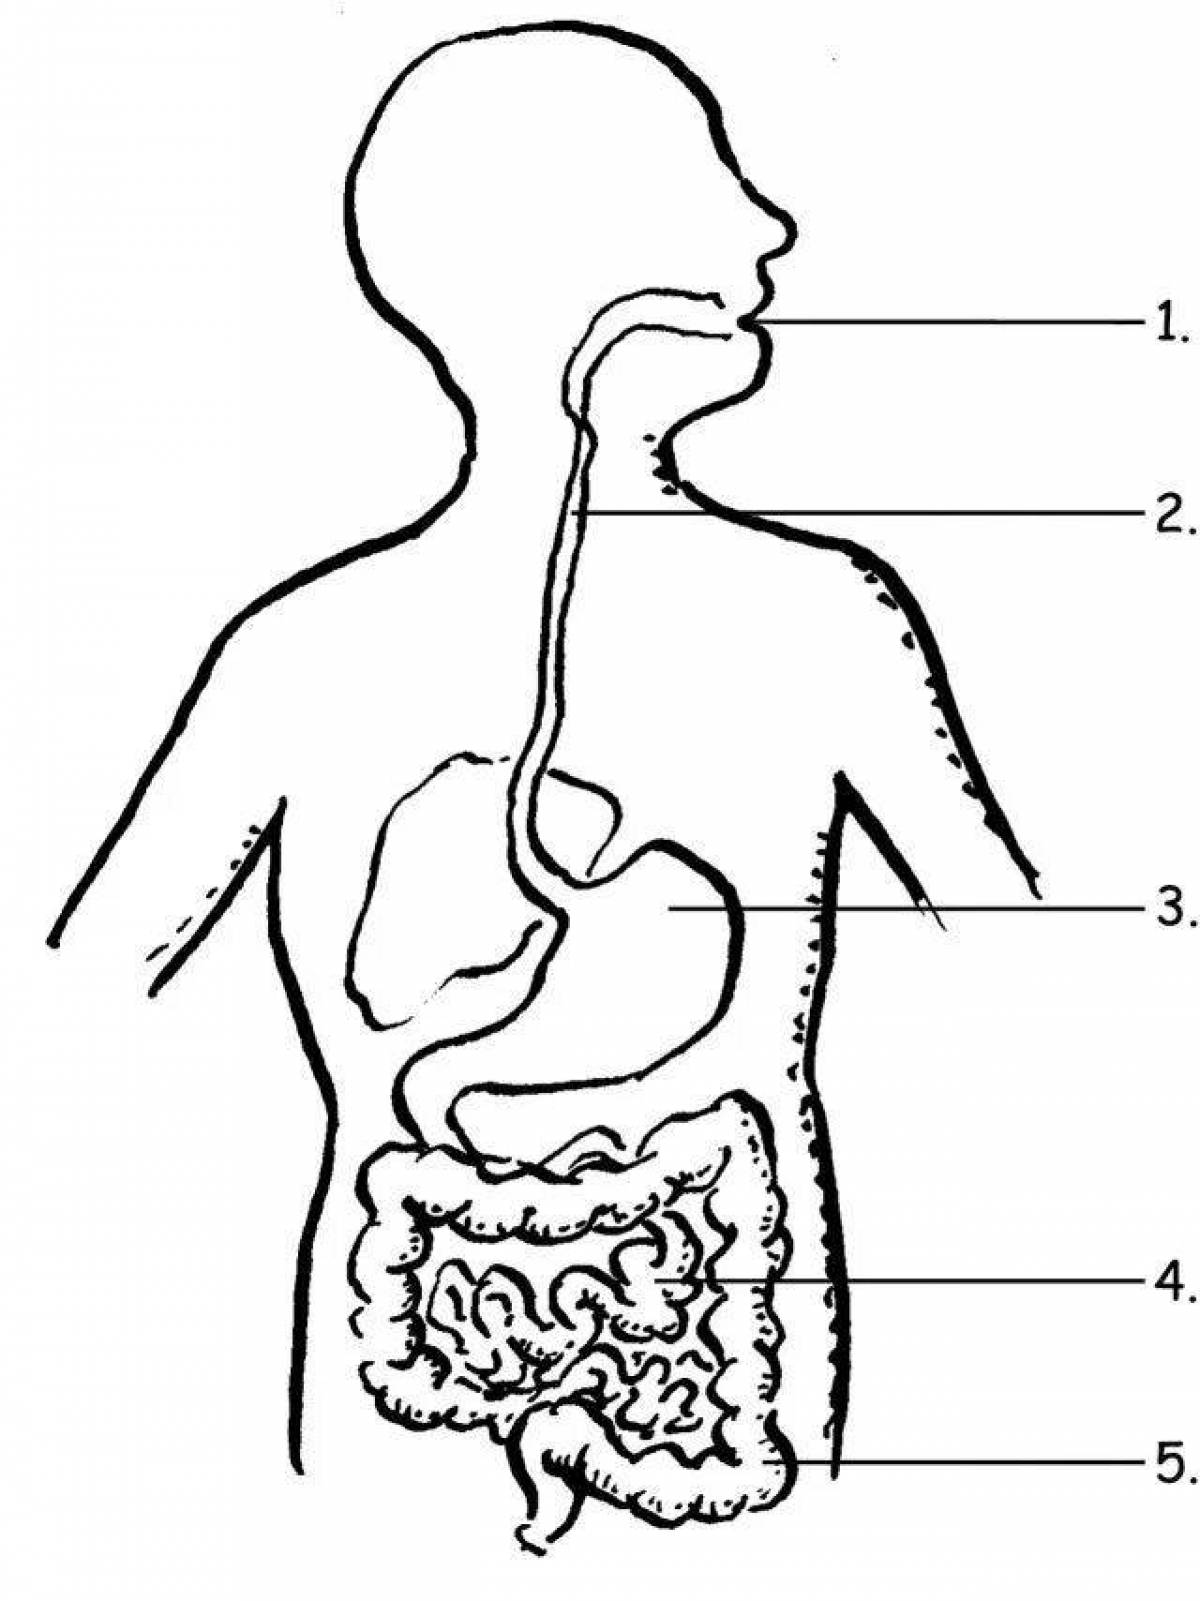 Human digestive system #24